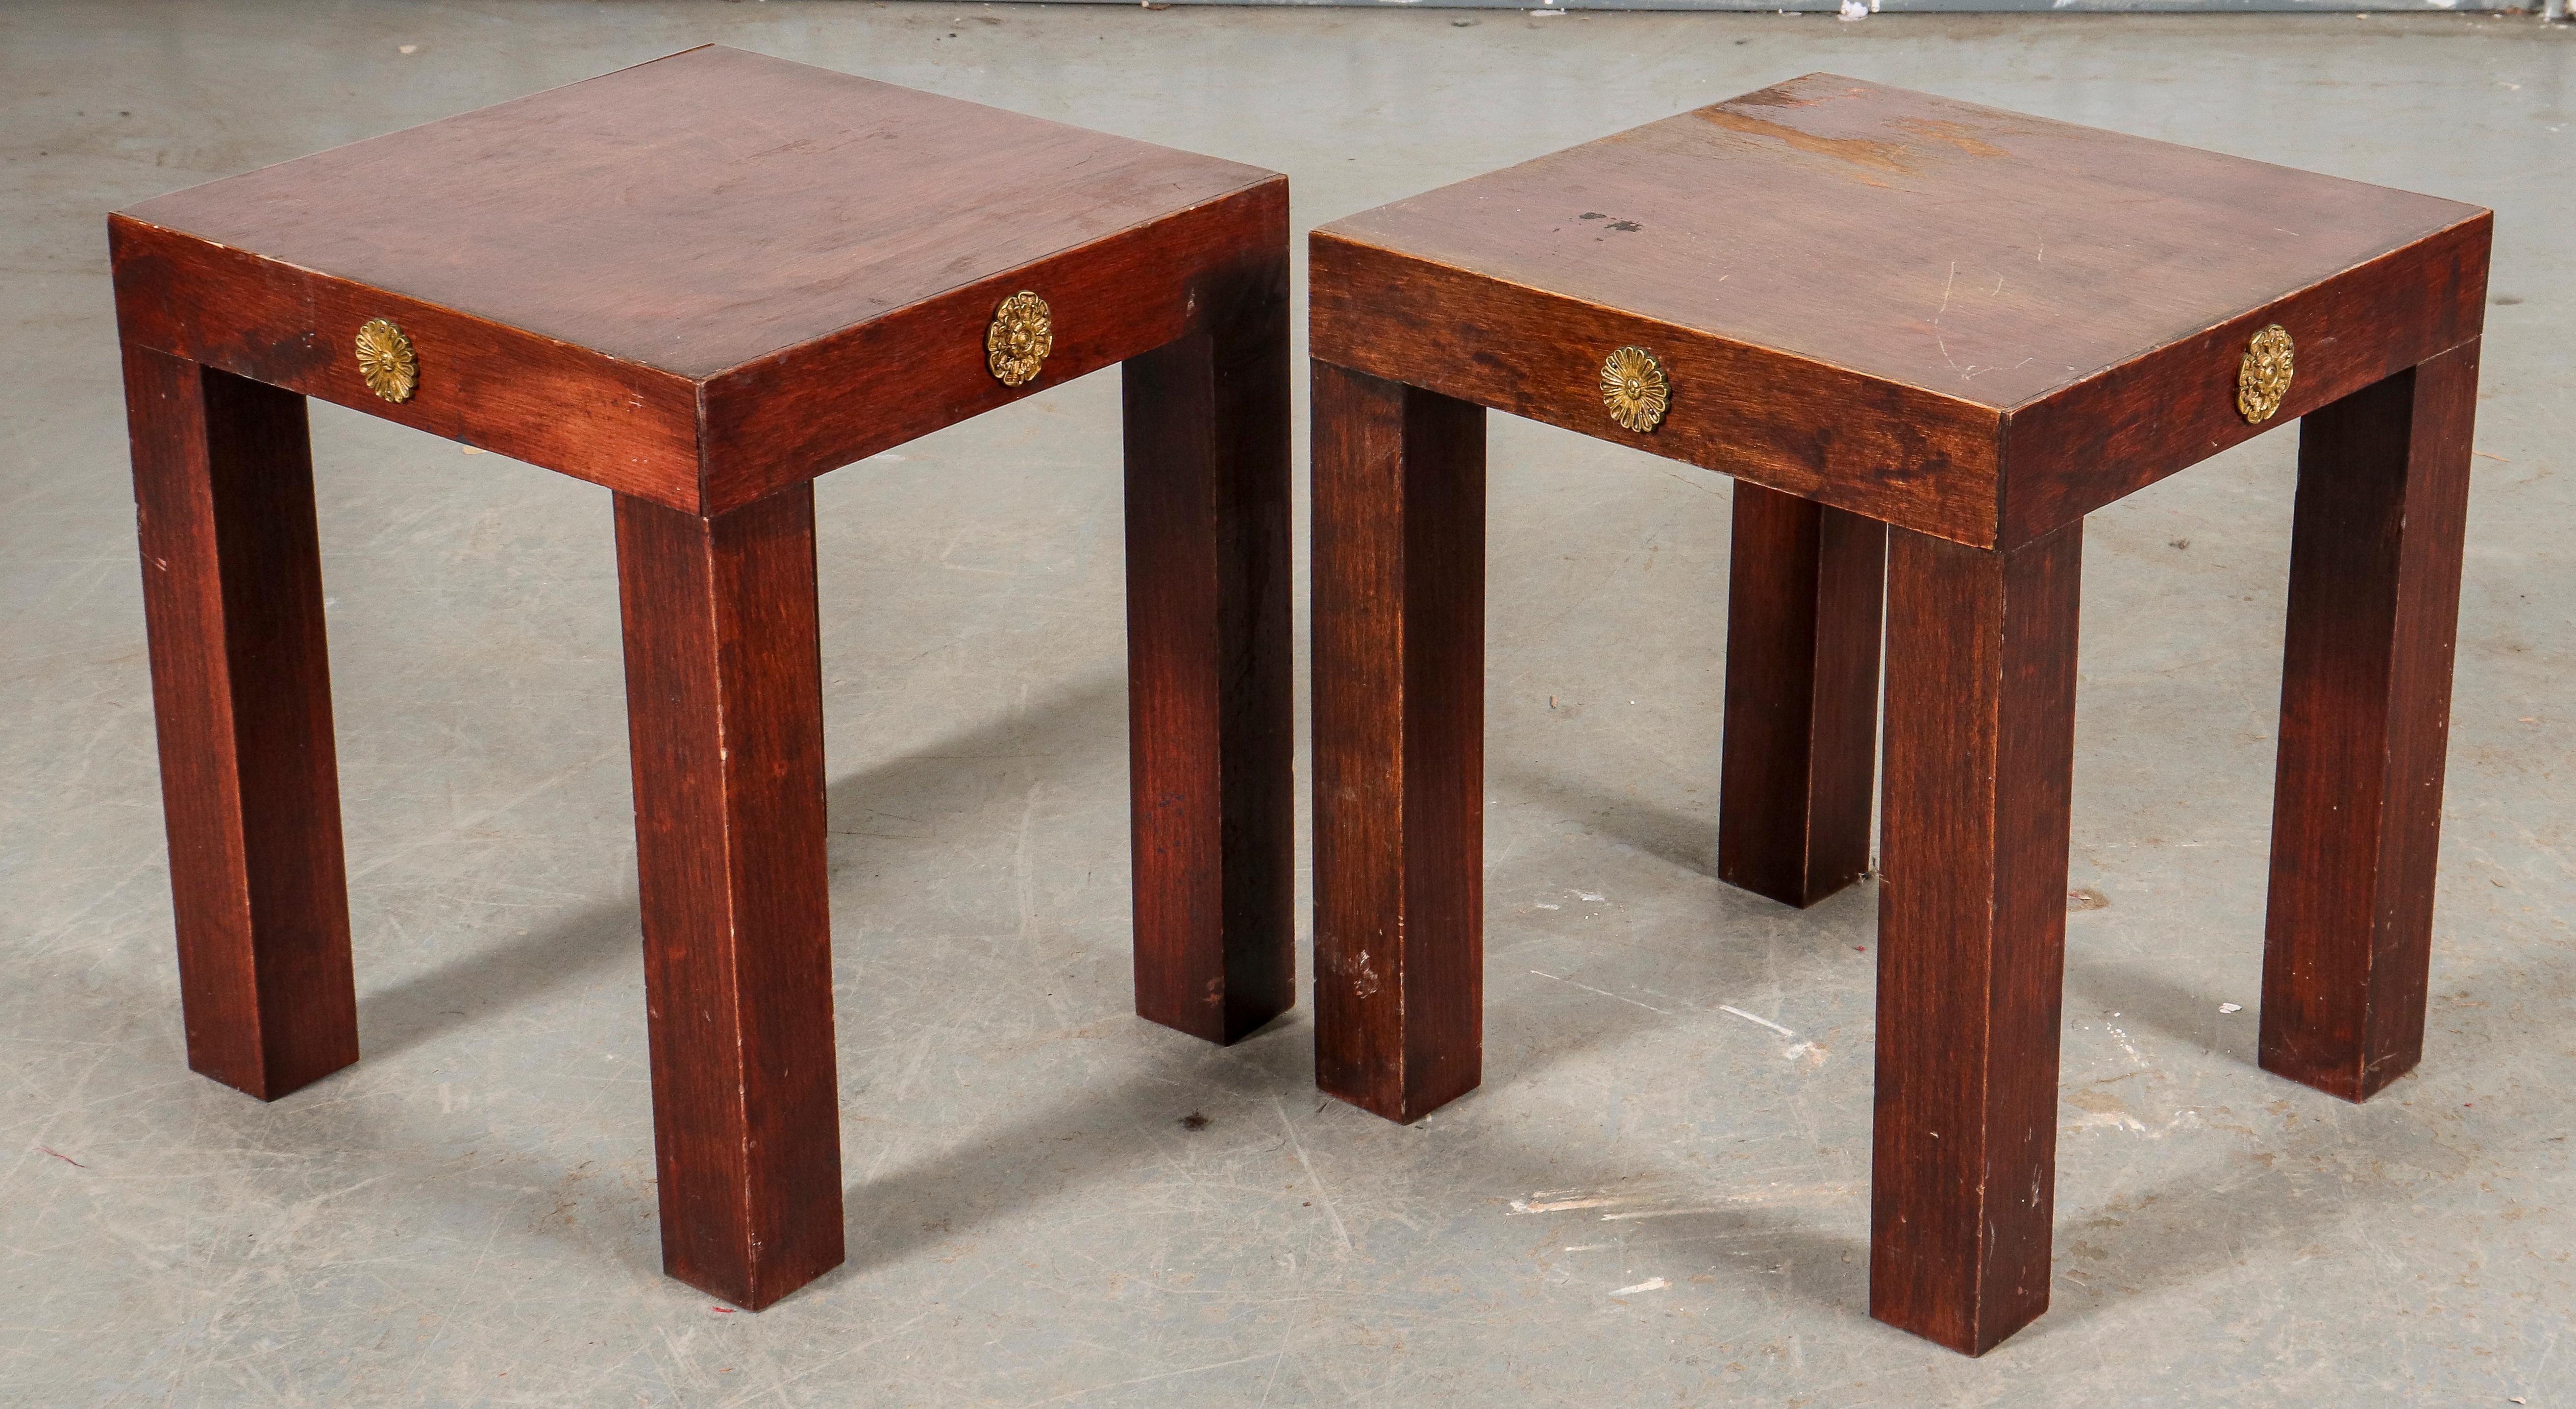 19th Century Empire Revival Diminutive Pedestal Tables, Pair For Sale